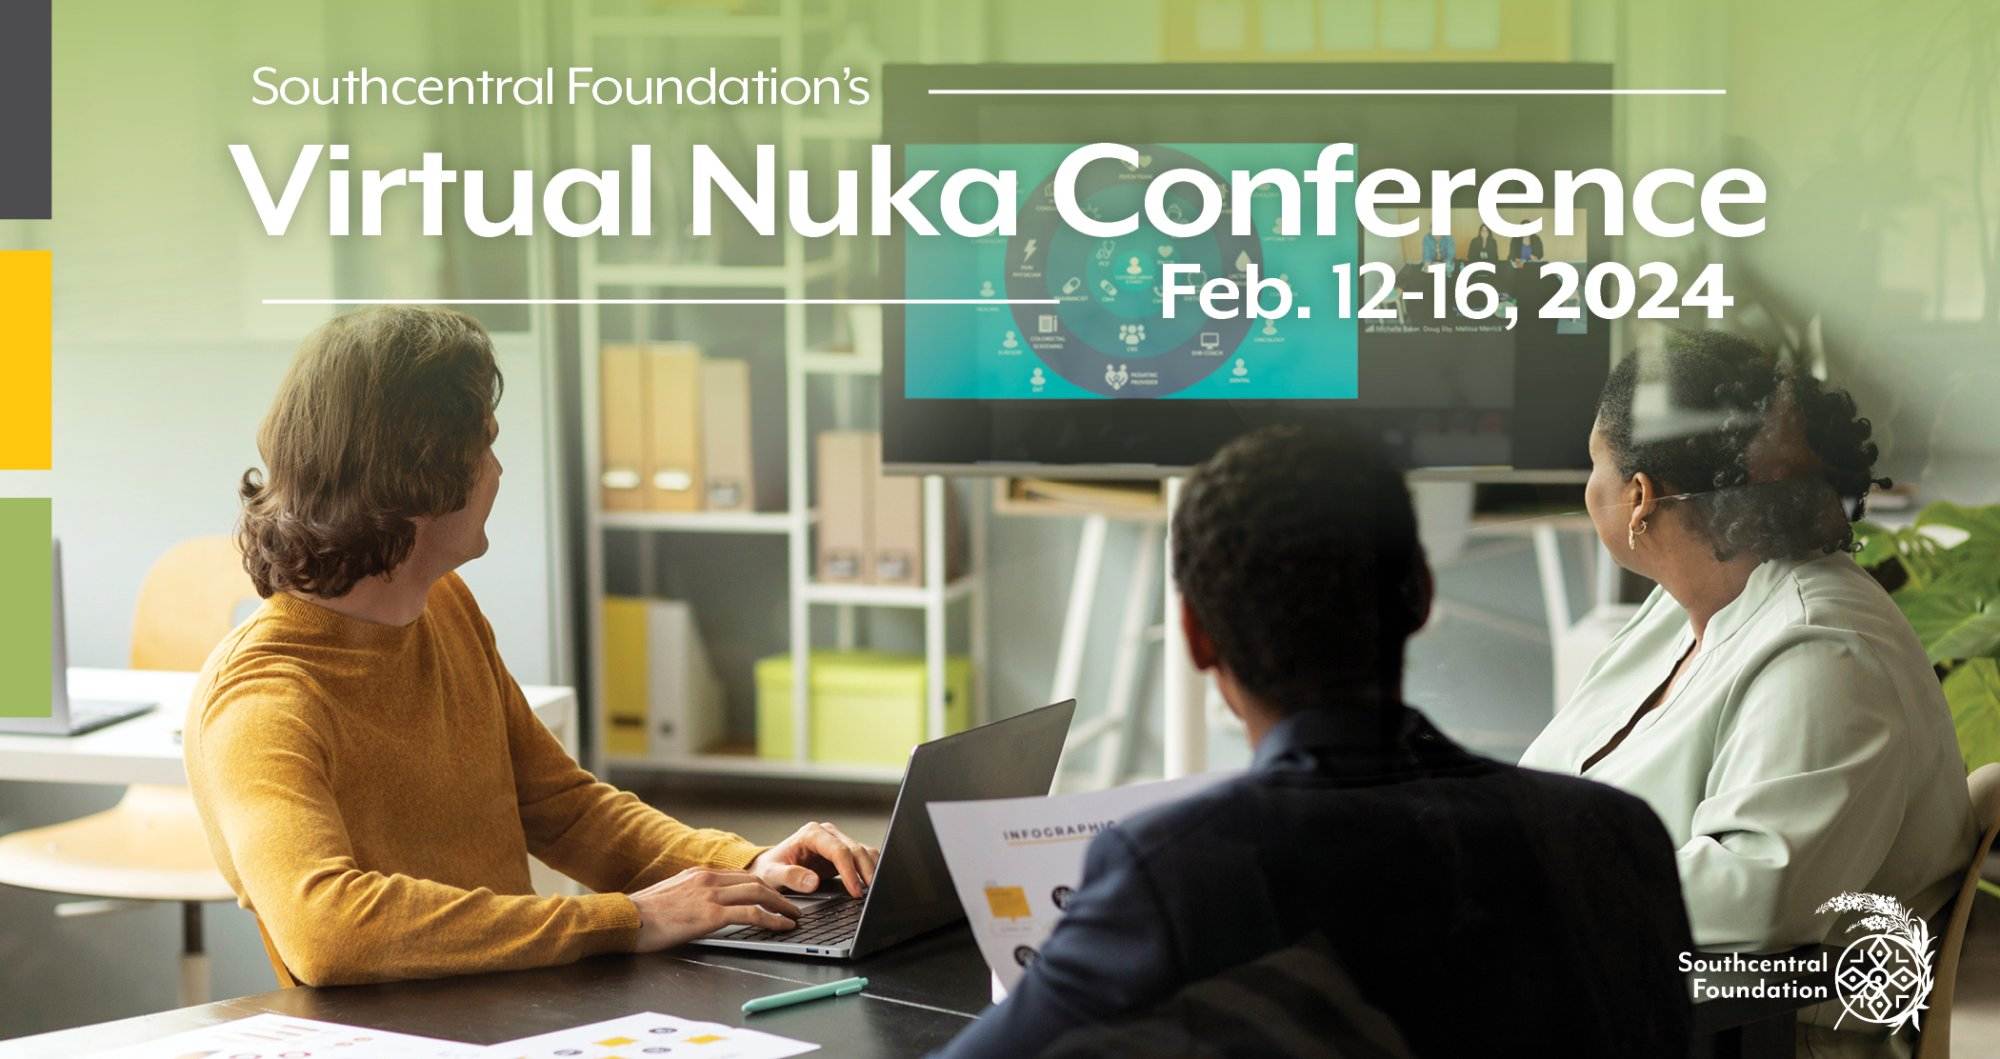 The Virtual Nuka Conference